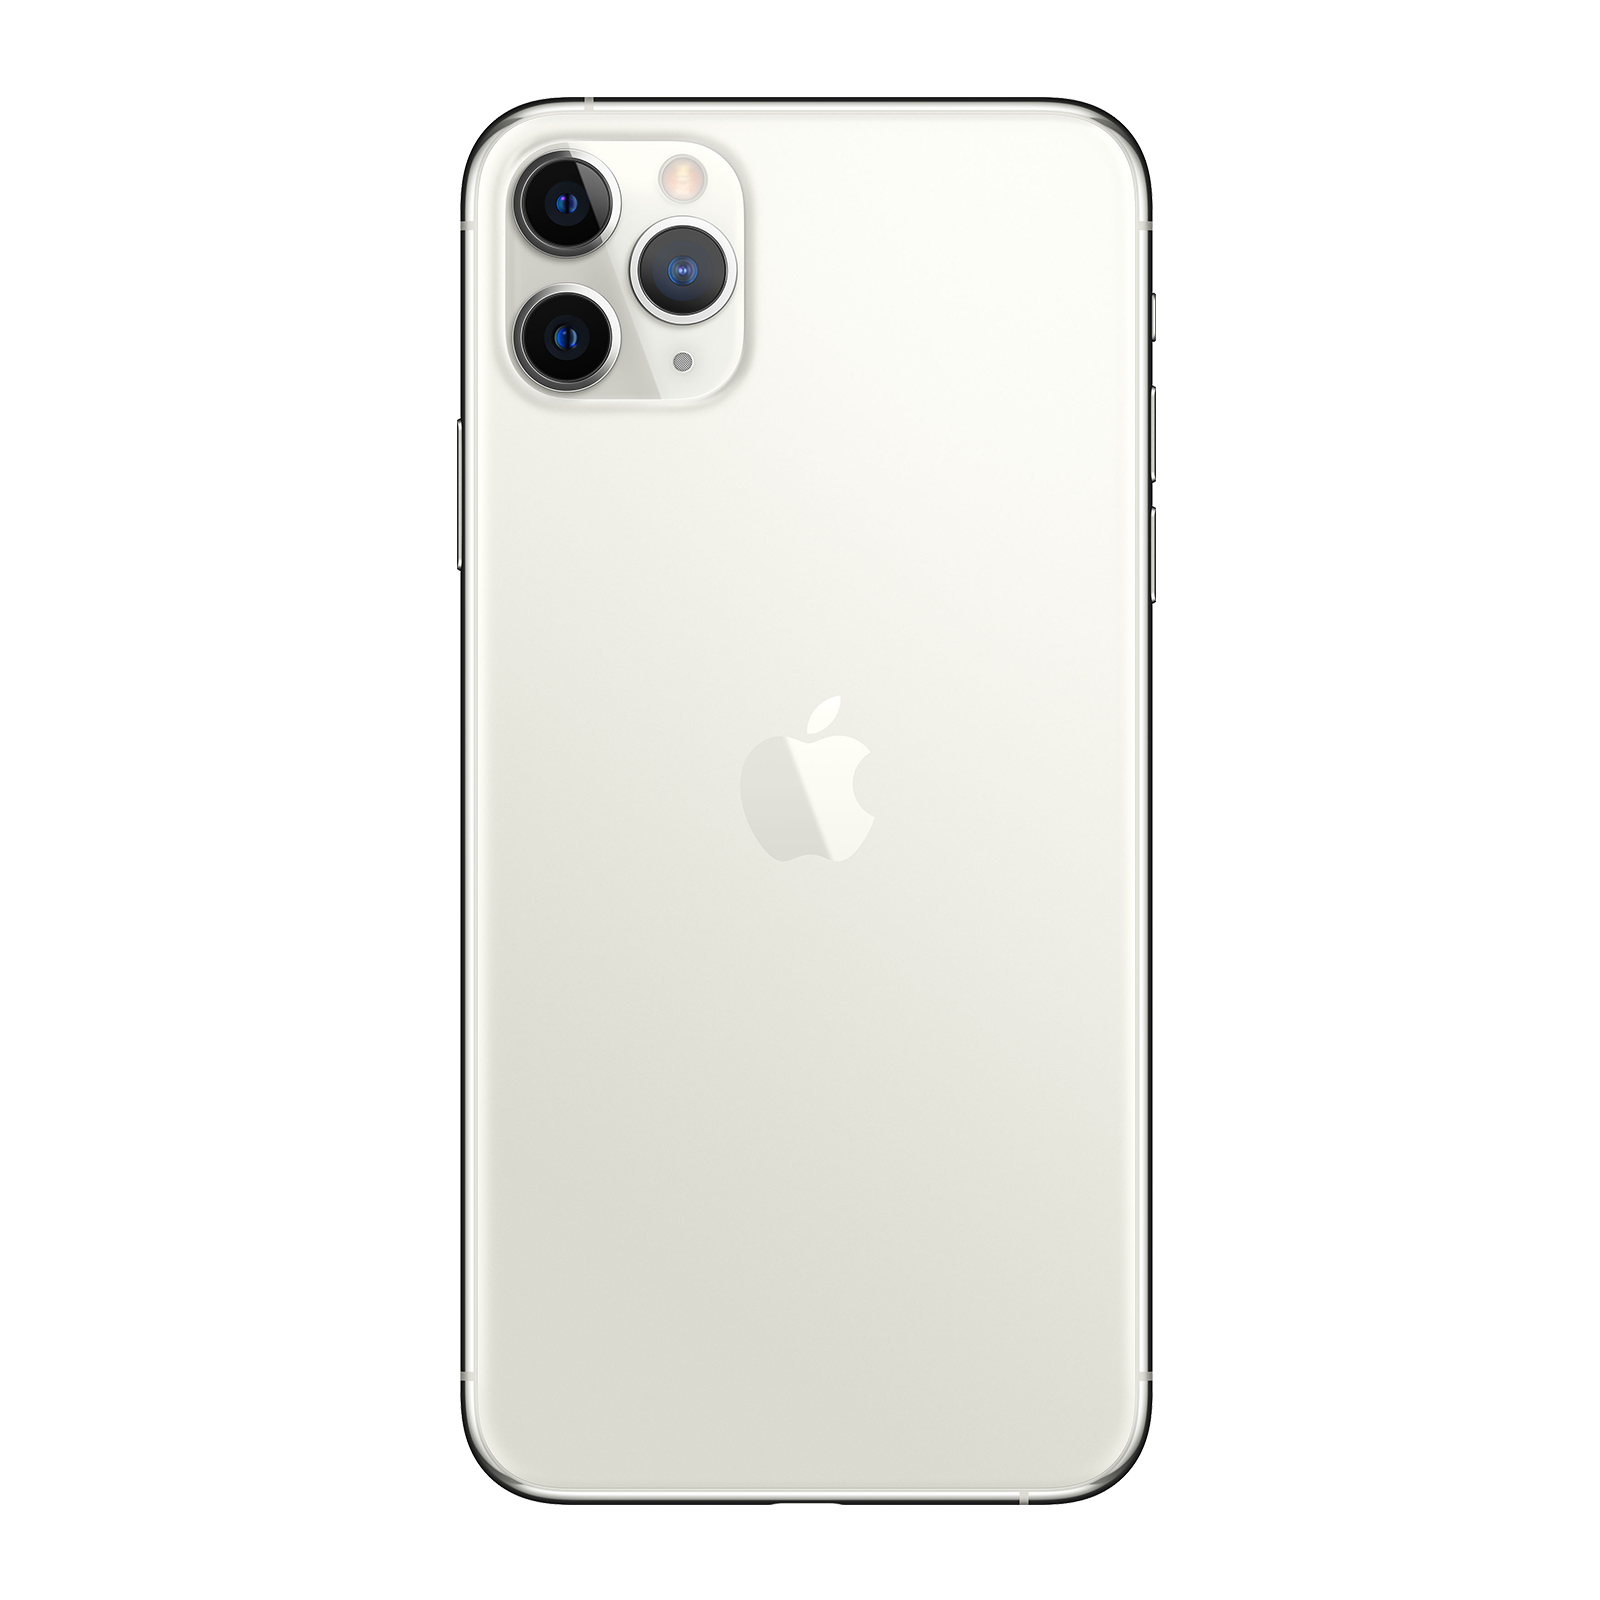 Apple iPhone 11 Pro Max 512GB Silver Good - Sprint